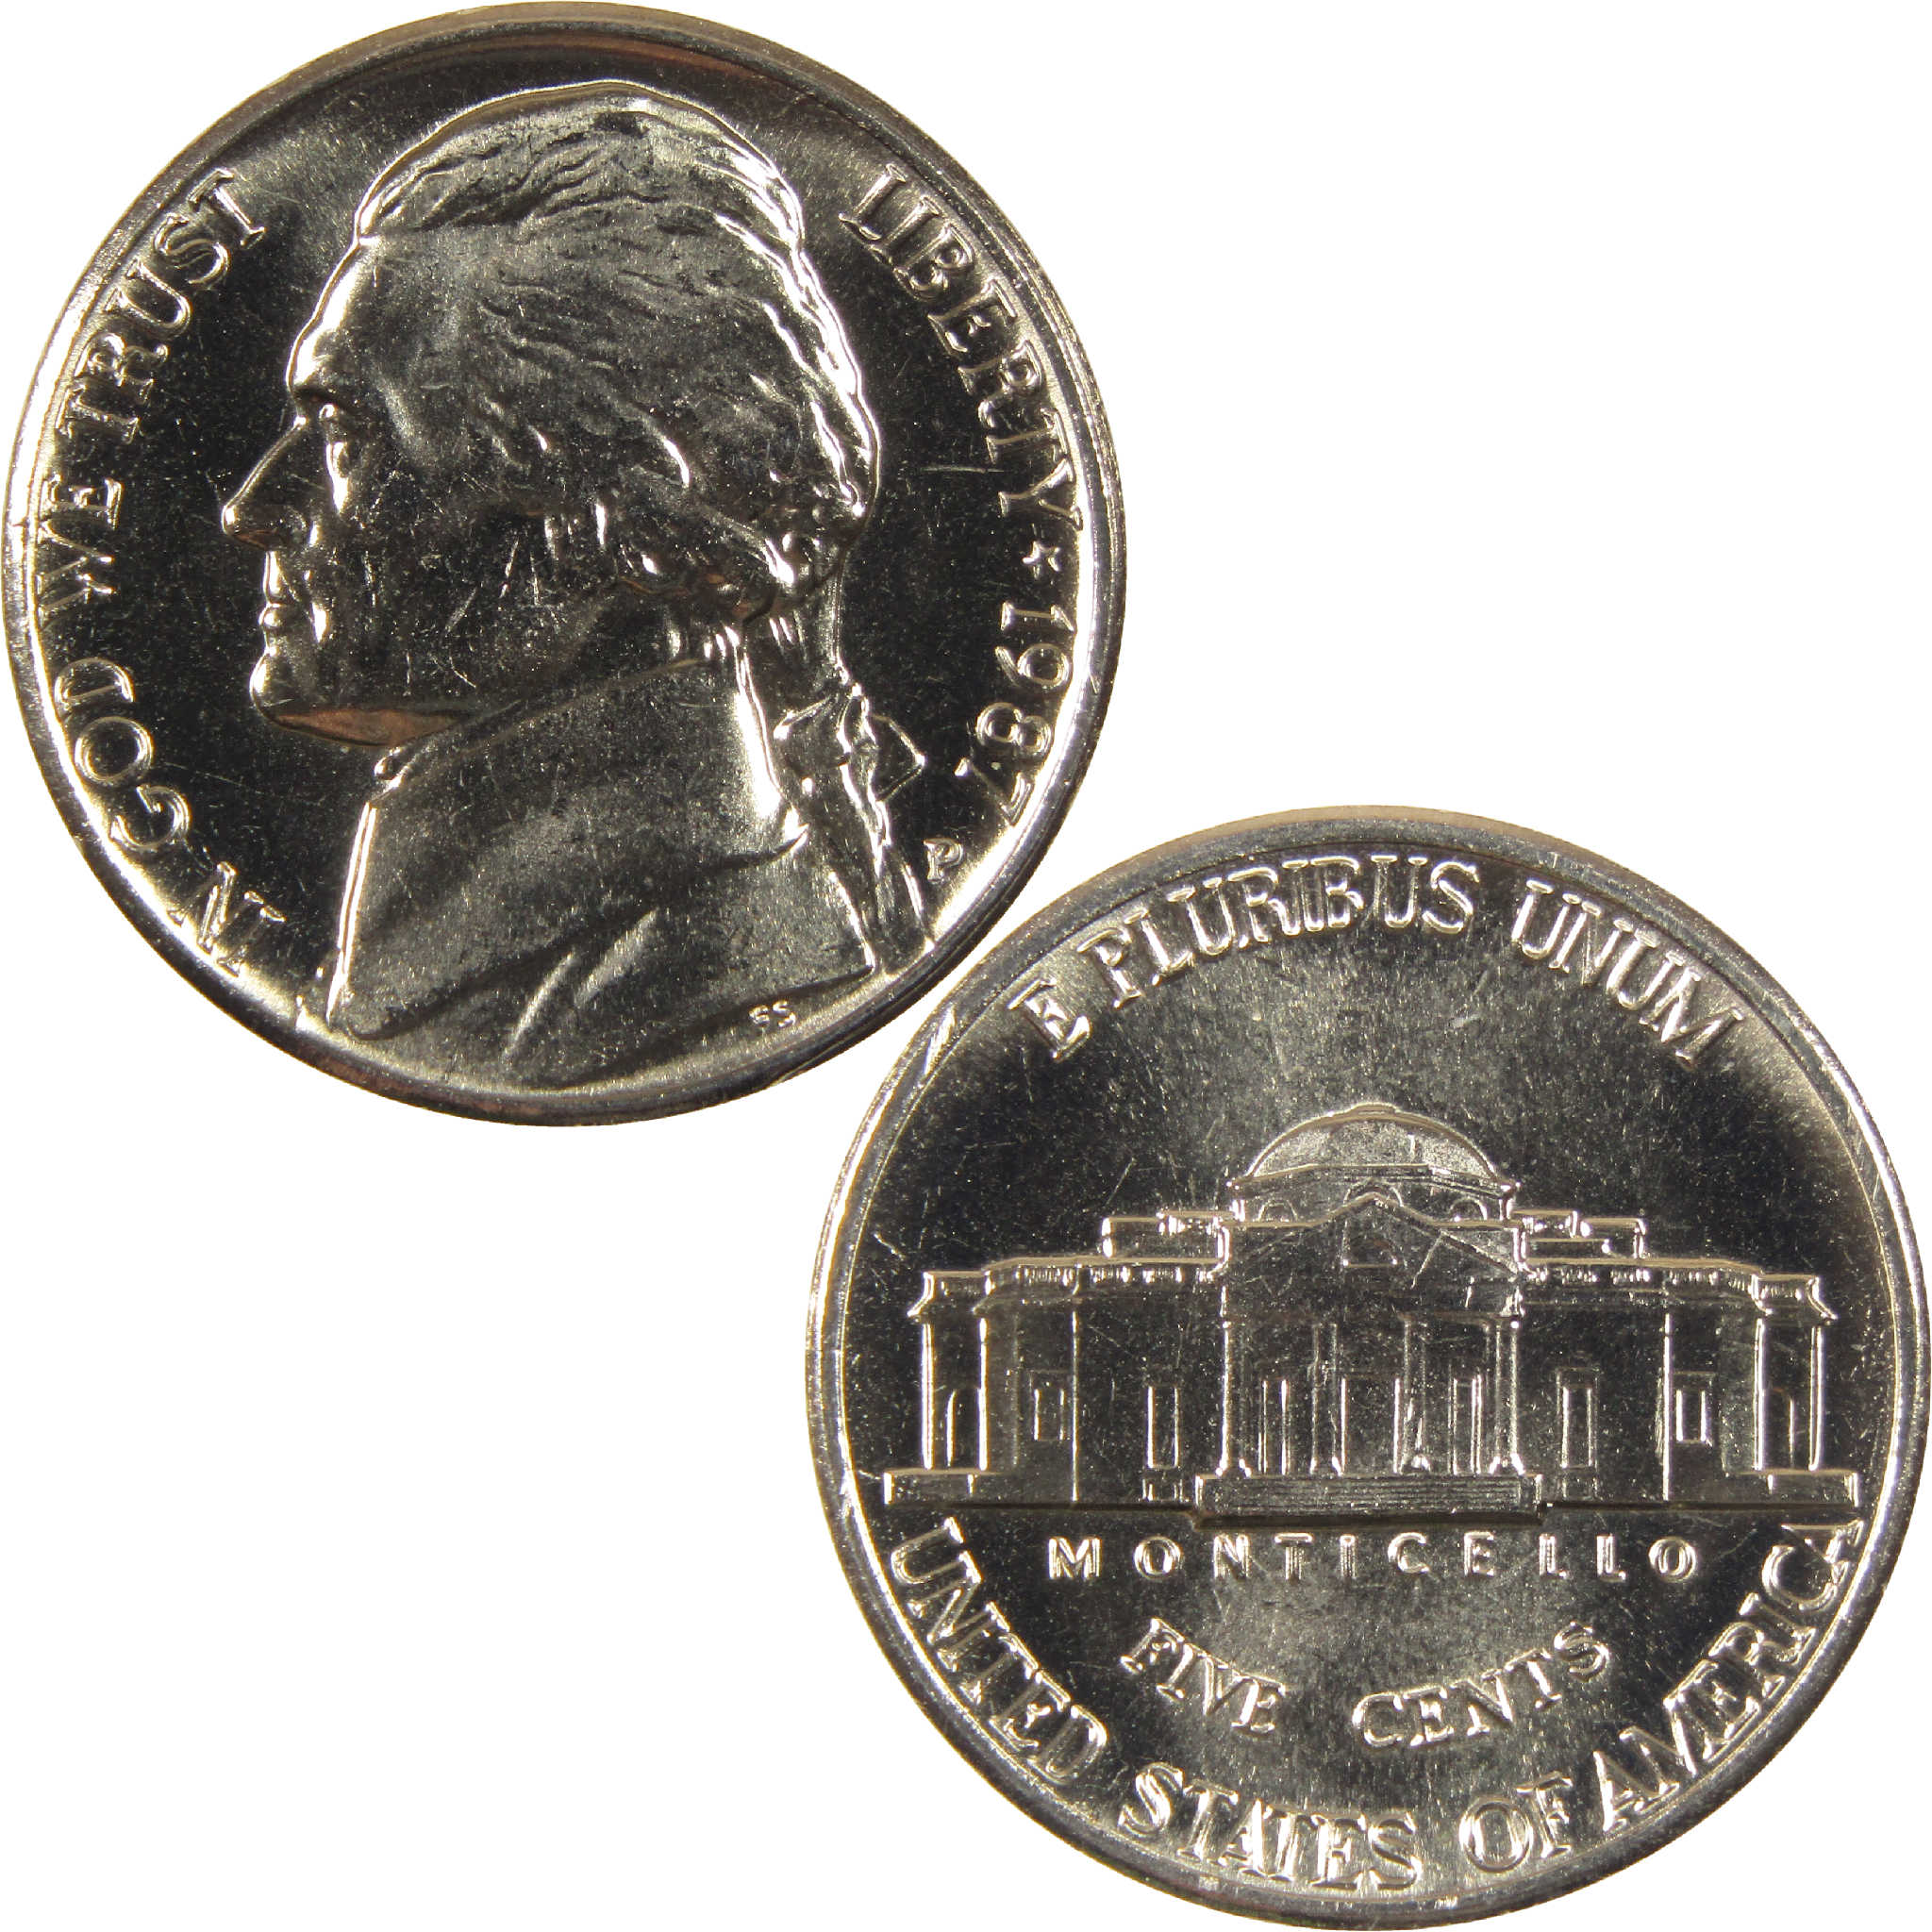 1987 P Jefferson Nickel BU Uncirculated 5c Coin